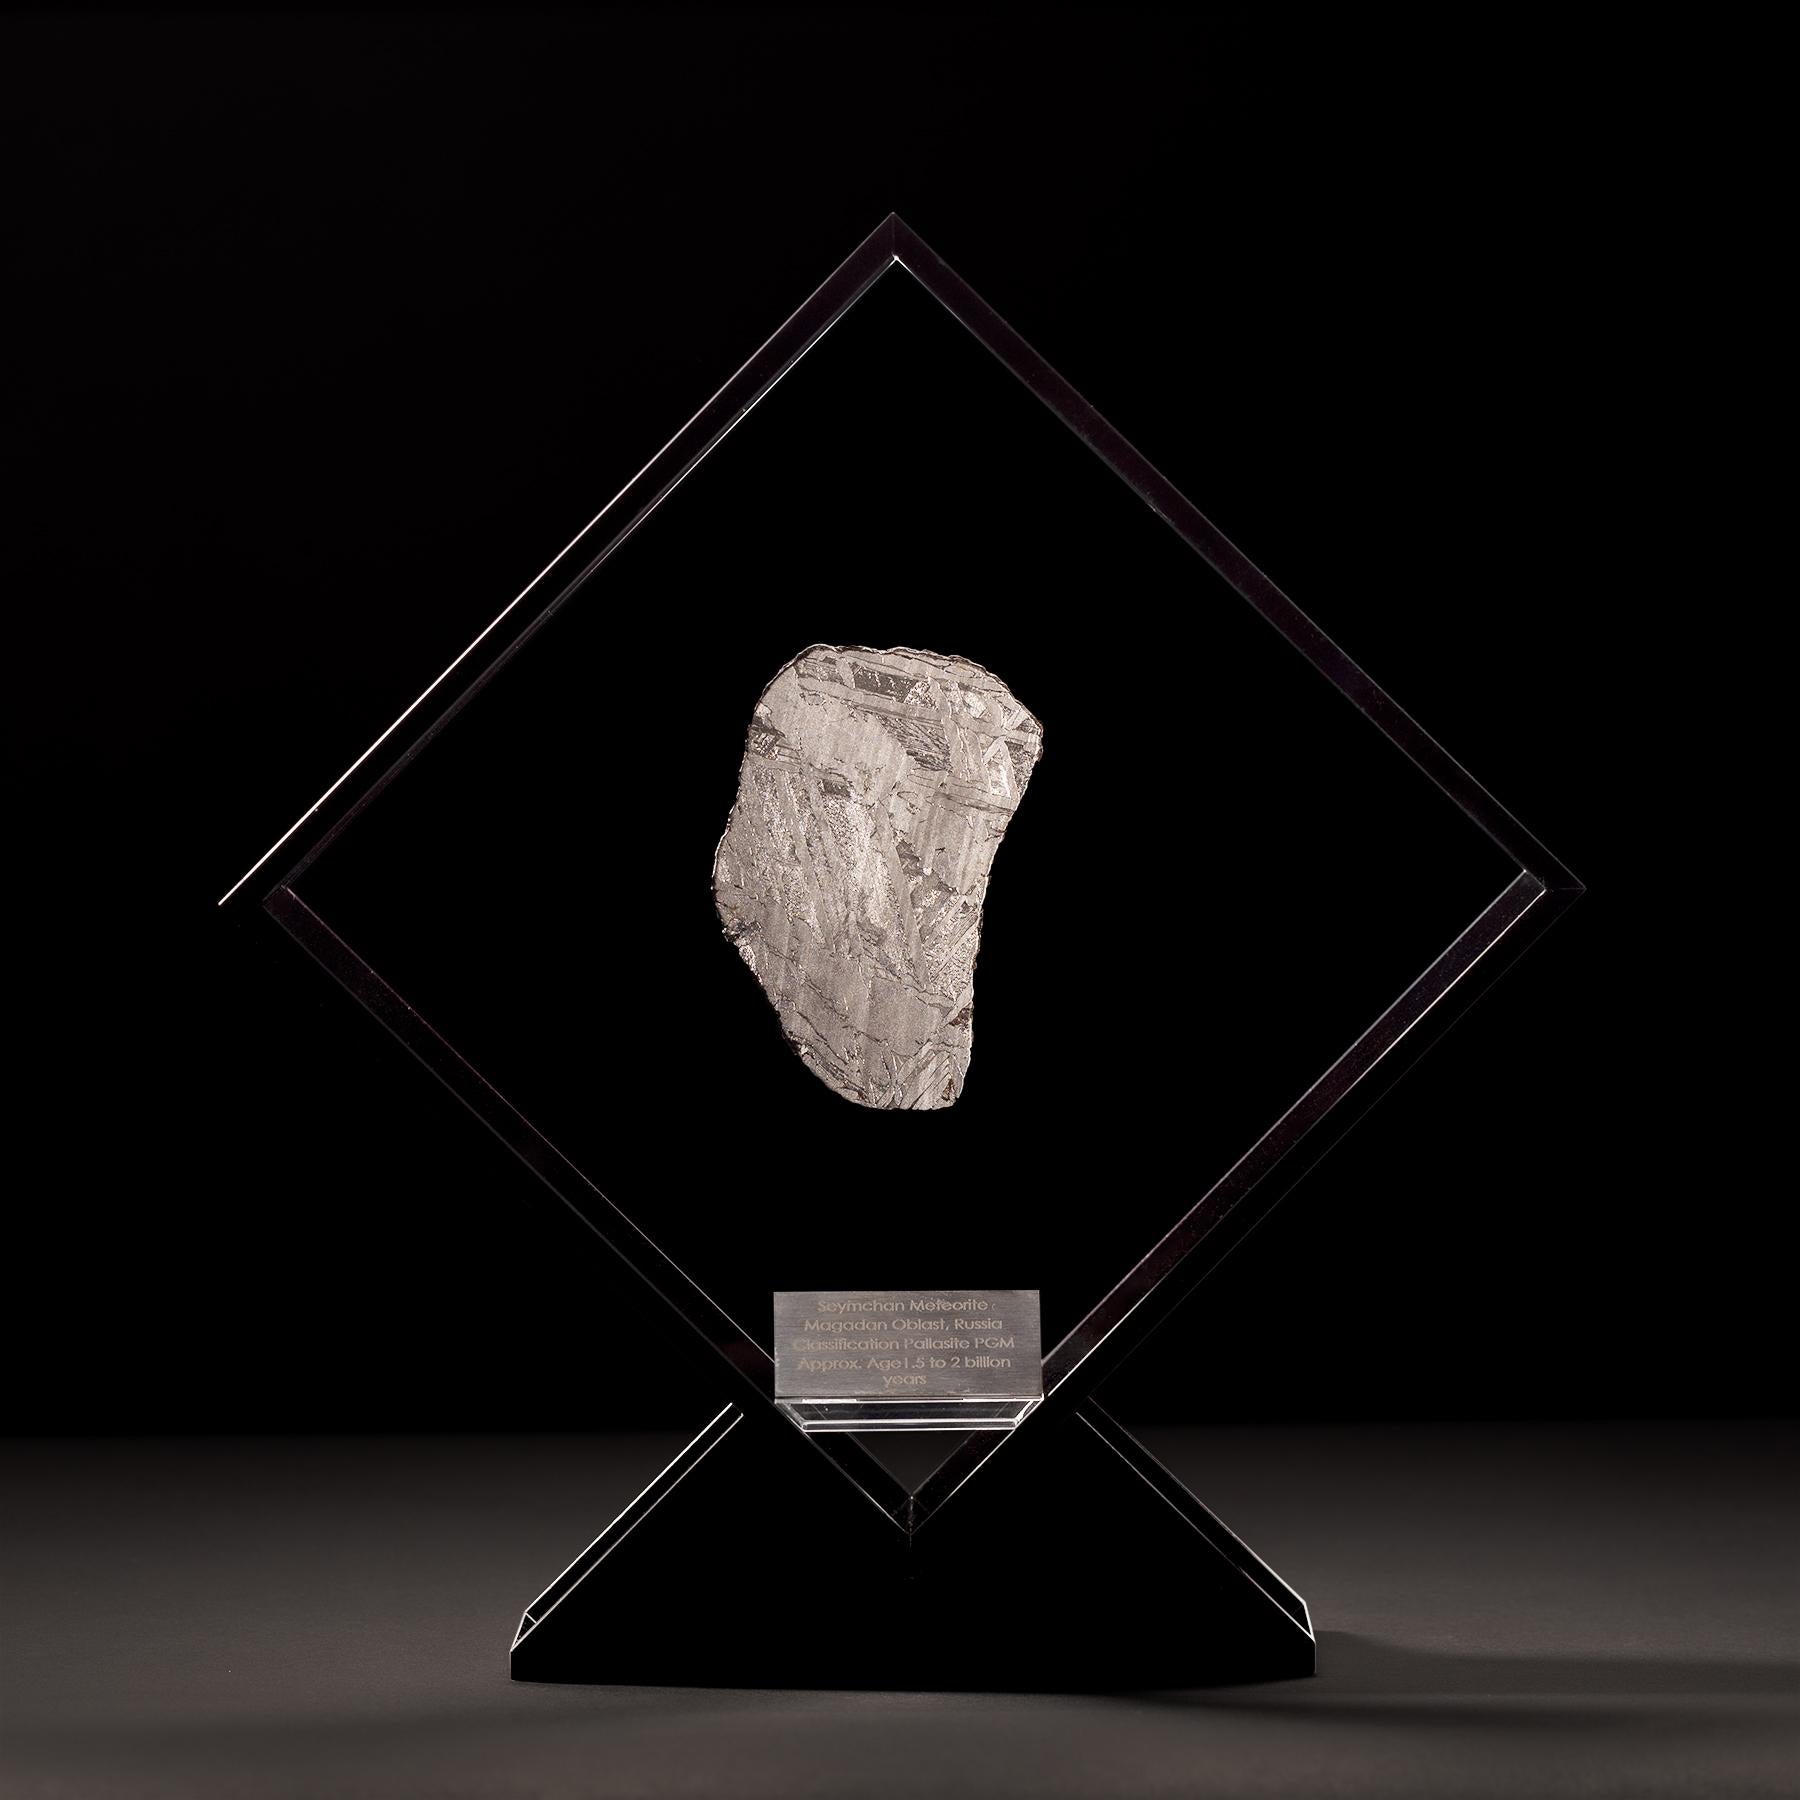 Mexican Original Design, Seymchan Meteorite in a Black Acrylic Display For Sale